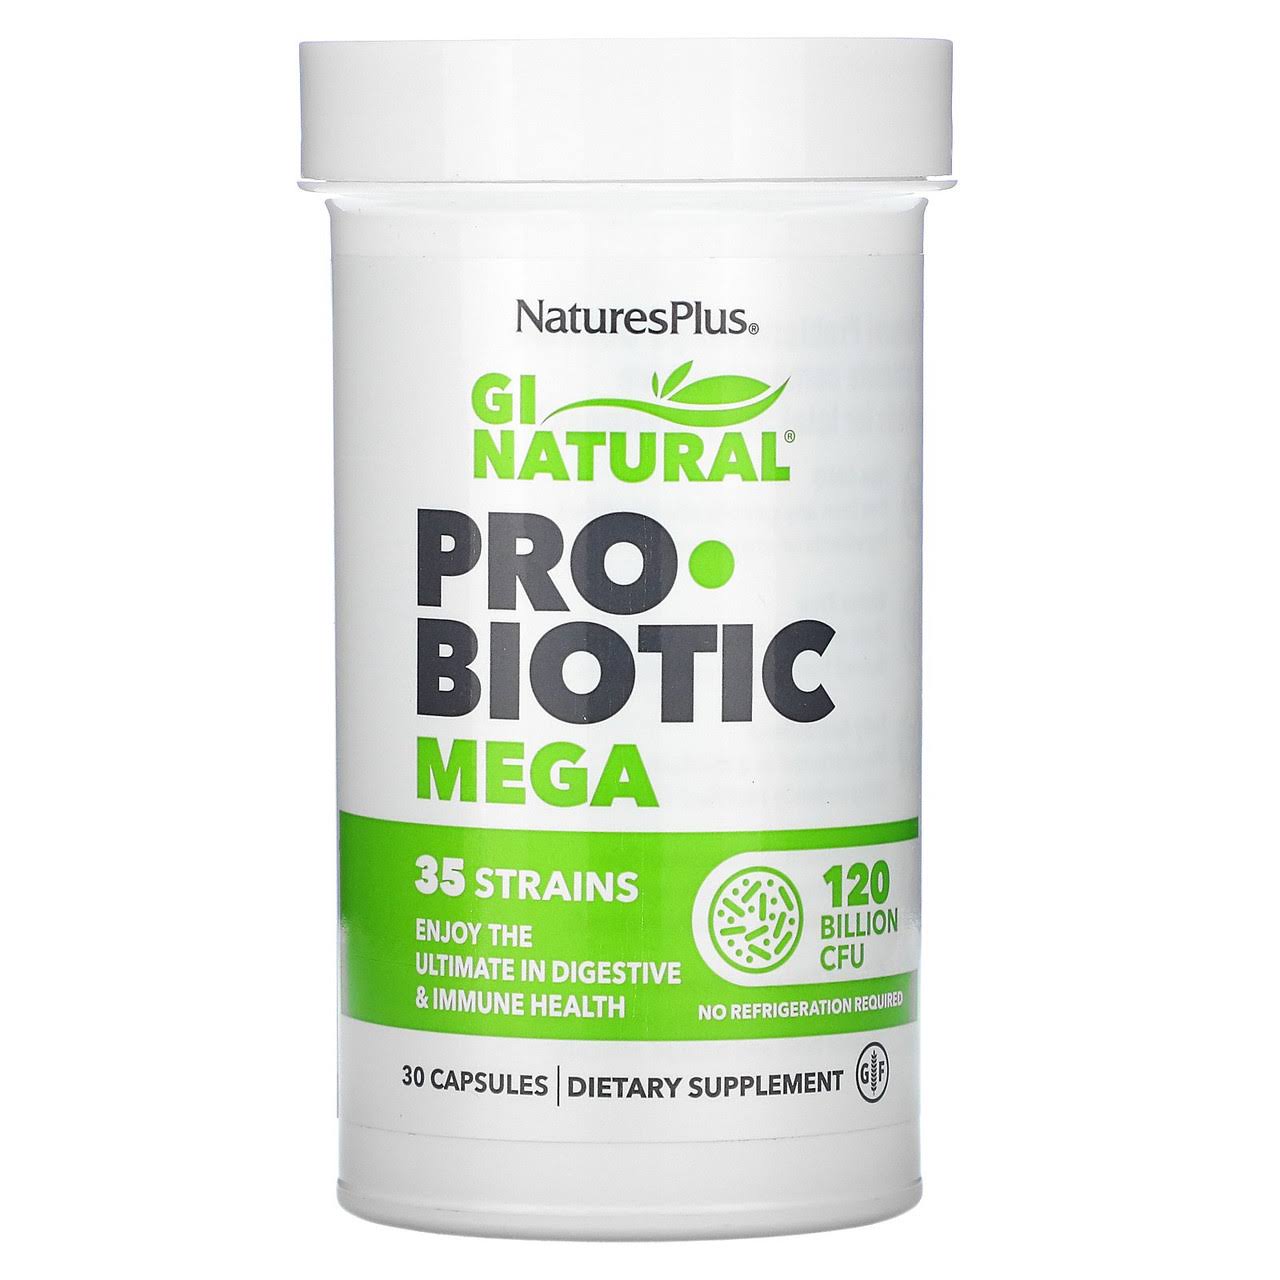 Nature's Plus Gi Natural Probiotic Mega - 120 Billion CFU, 30 Capsules